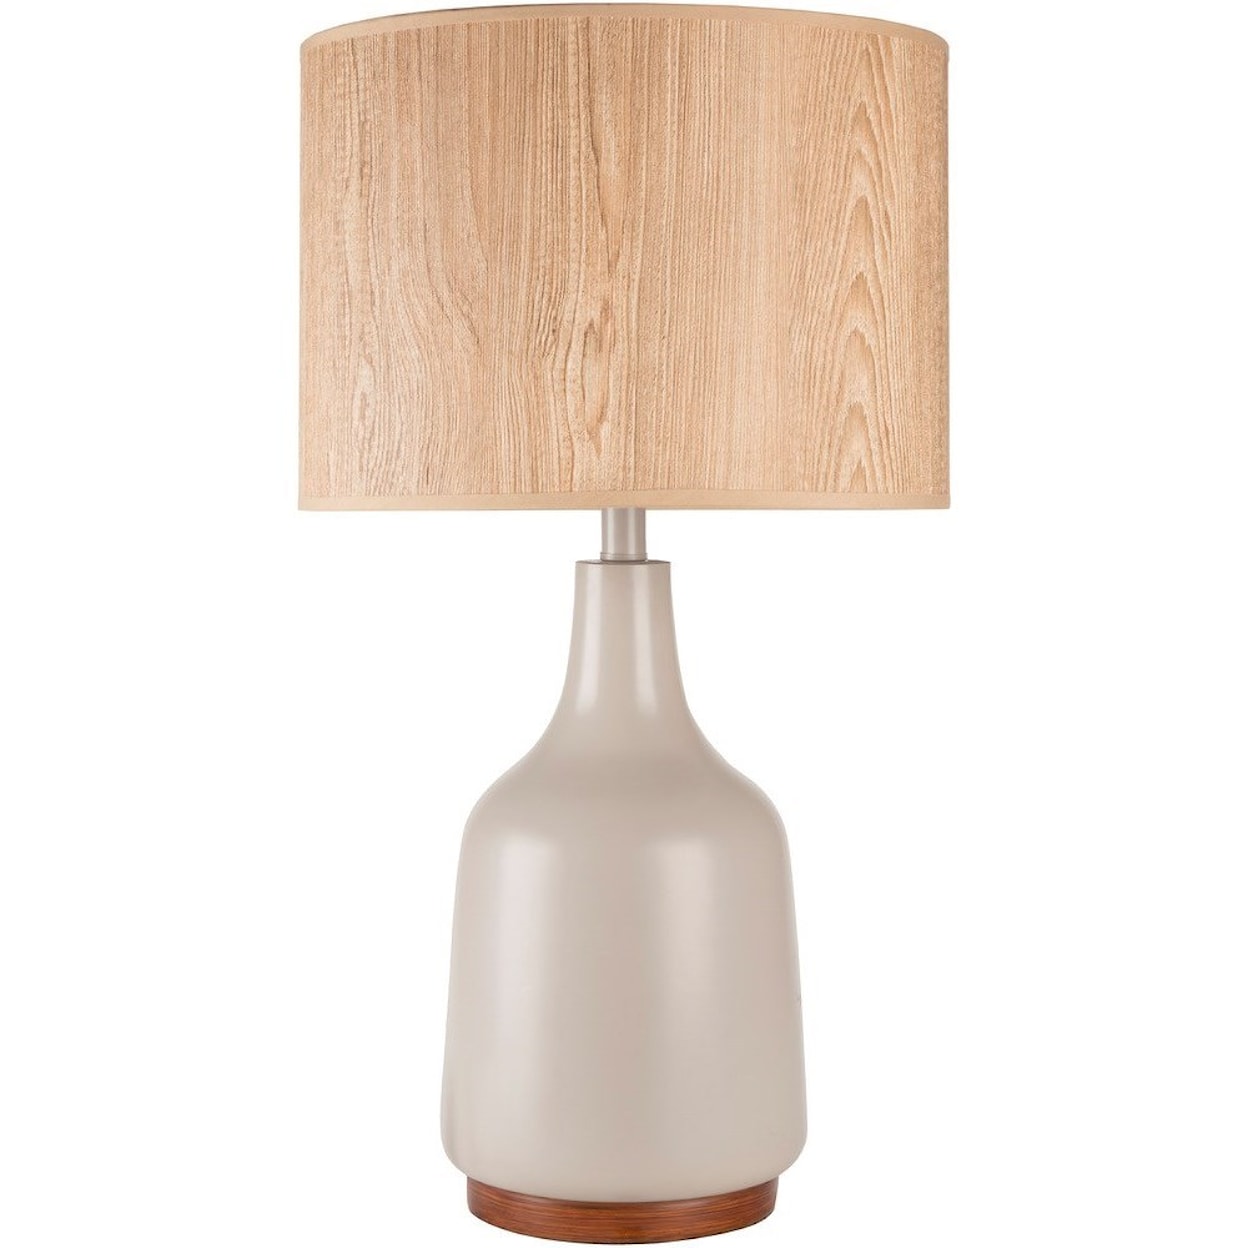 Surya Allen Gray Contemporary Table Lamp